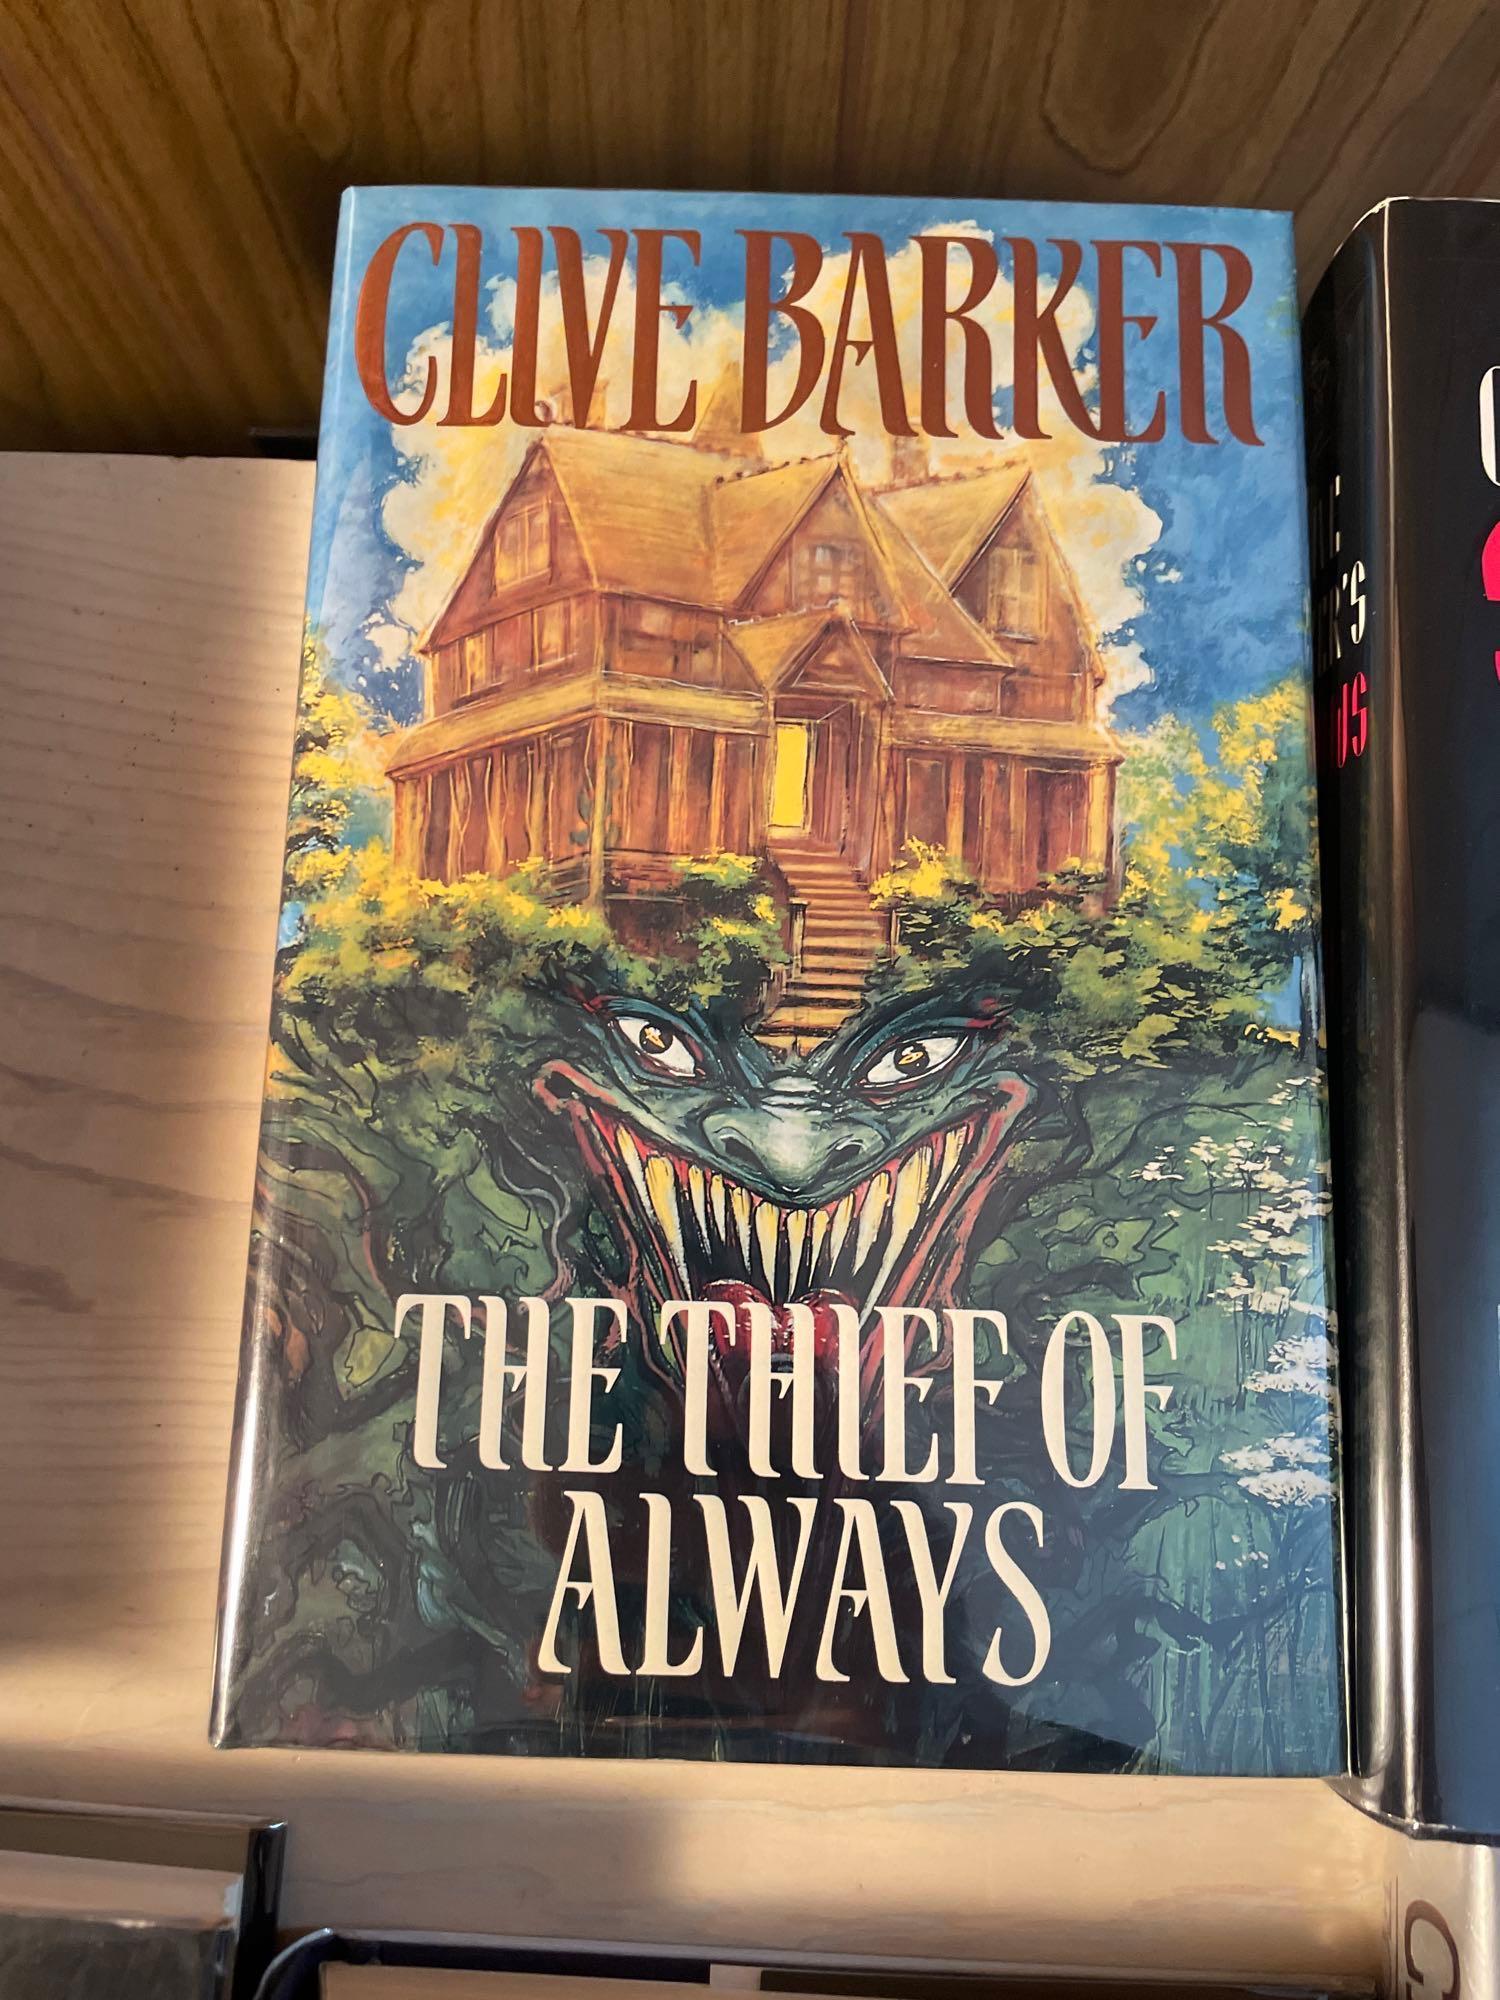 Clive Barker HC Books (6)